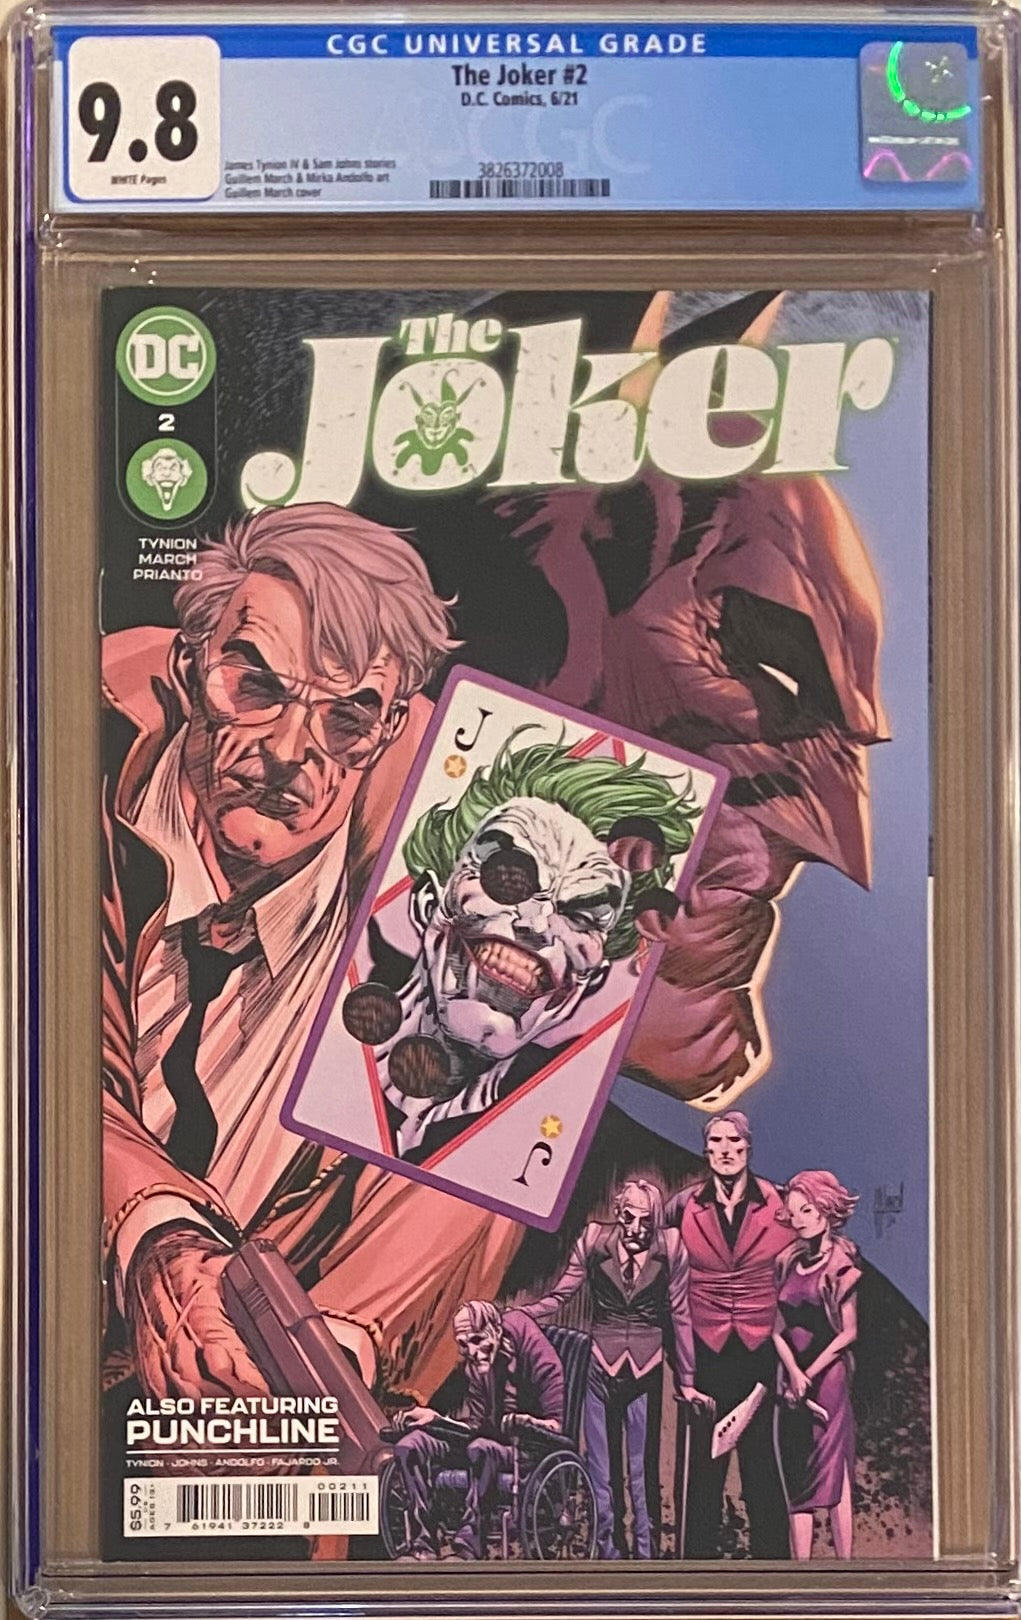 The Joker #2 CGC 9.8 - First appearance Vengeance